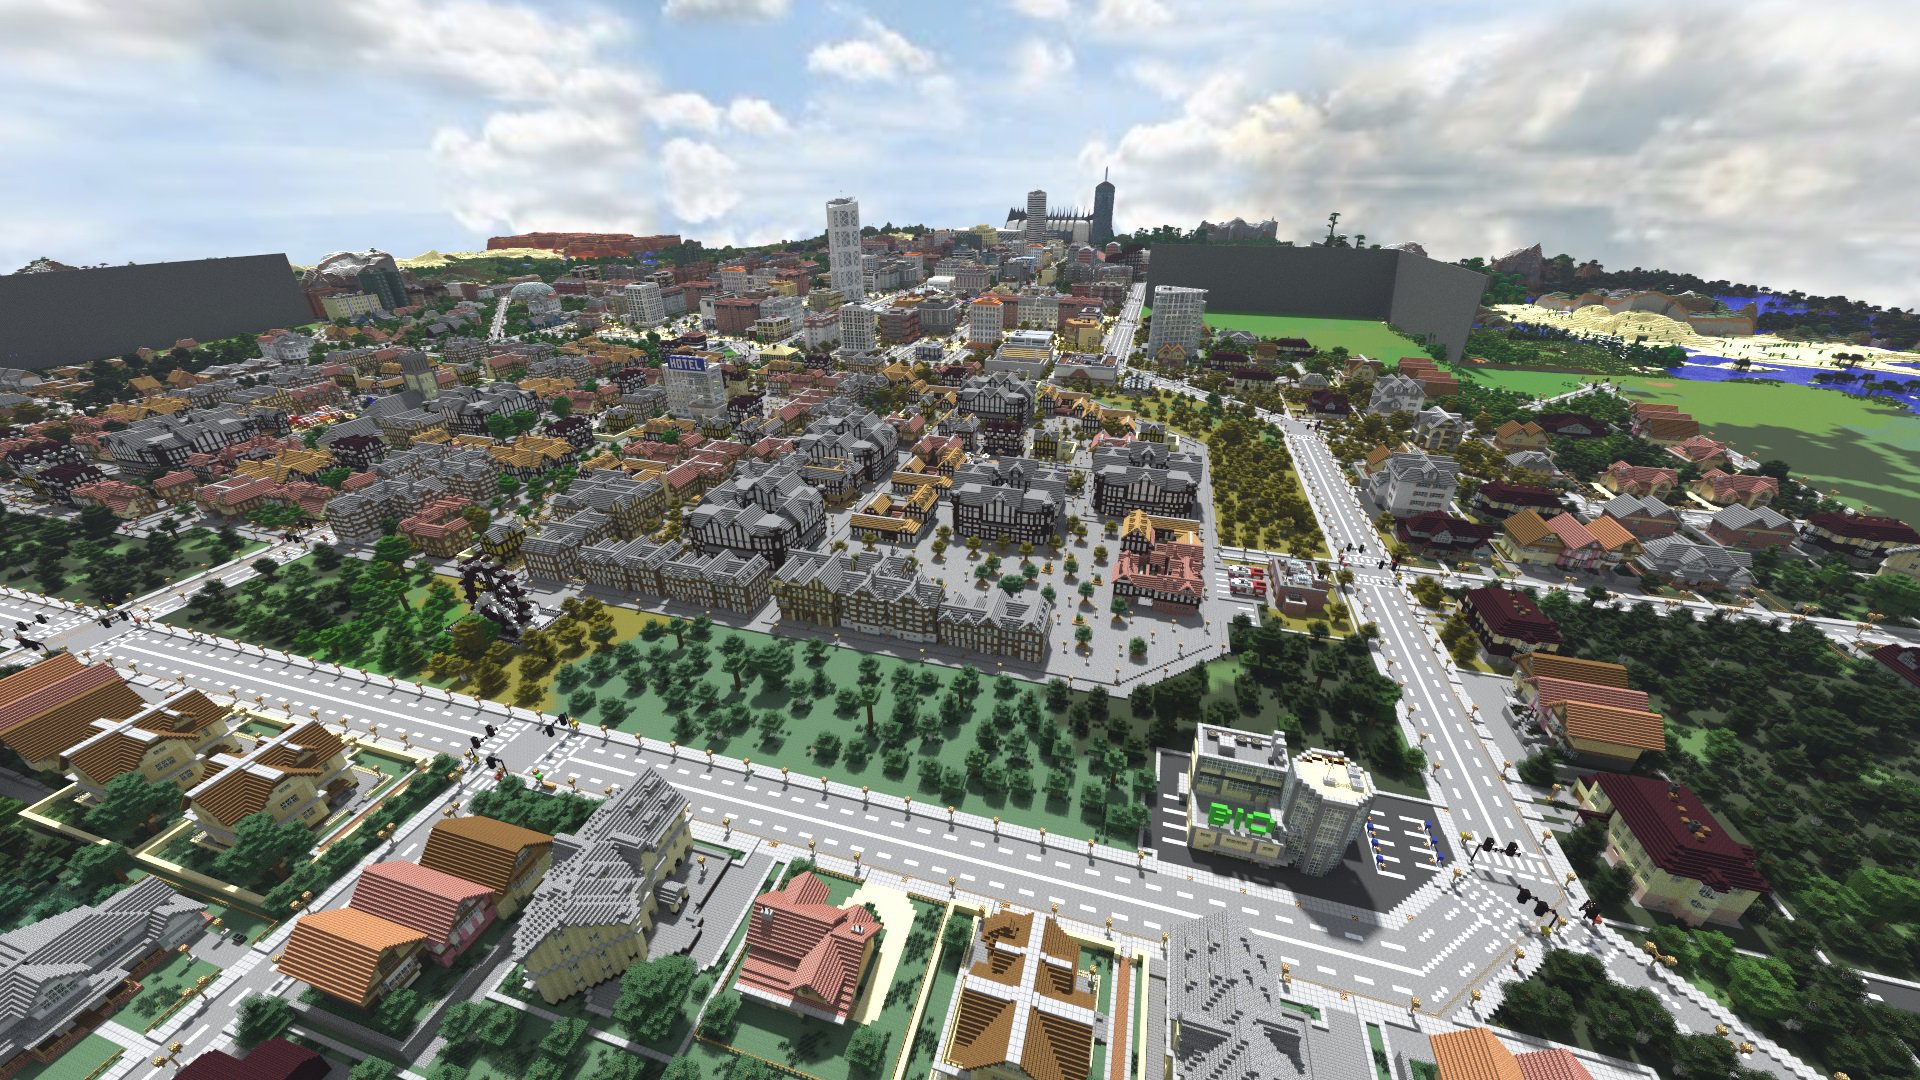 city map in minecraft 1.12.2 with custom npcs